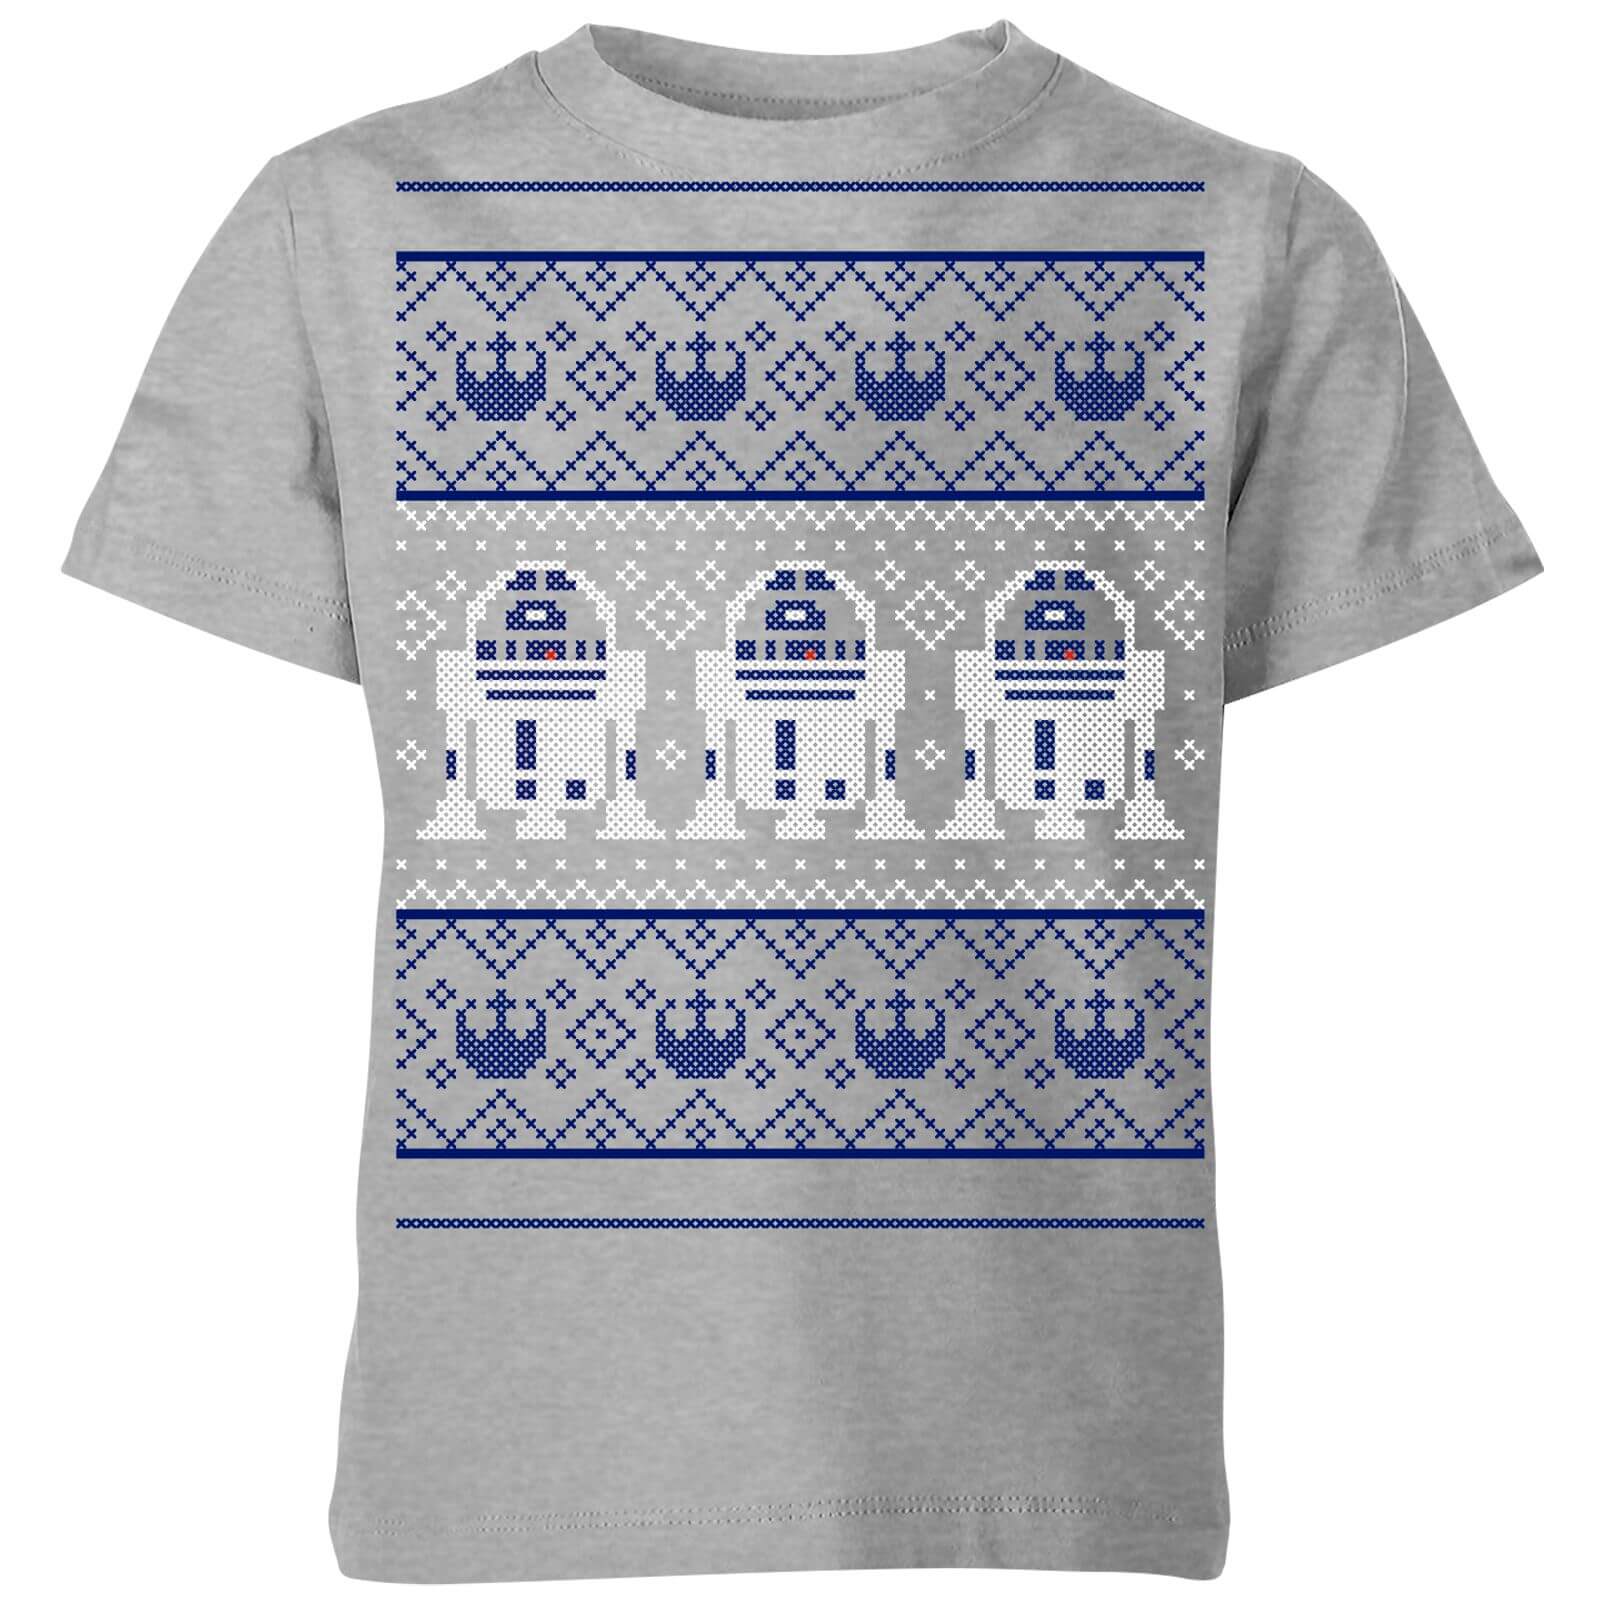 Star Wars R2-D2 Knit Kids' Christmas T-Shirt - Grey - 9-10 Years - Grey